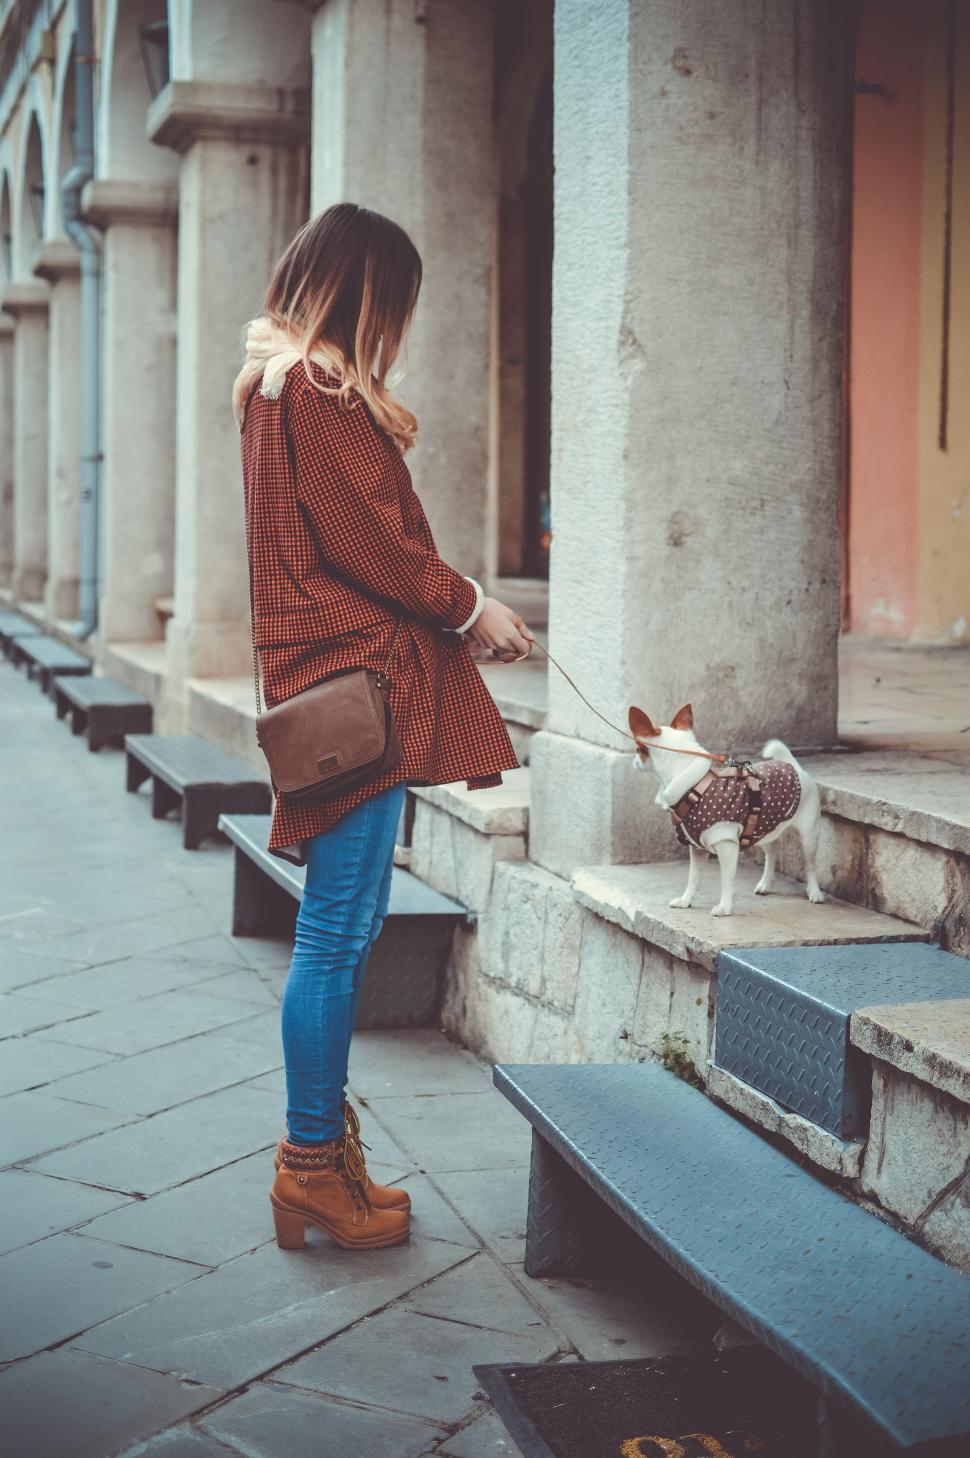 Free Image of Woman Walking Small Dog on Leash 